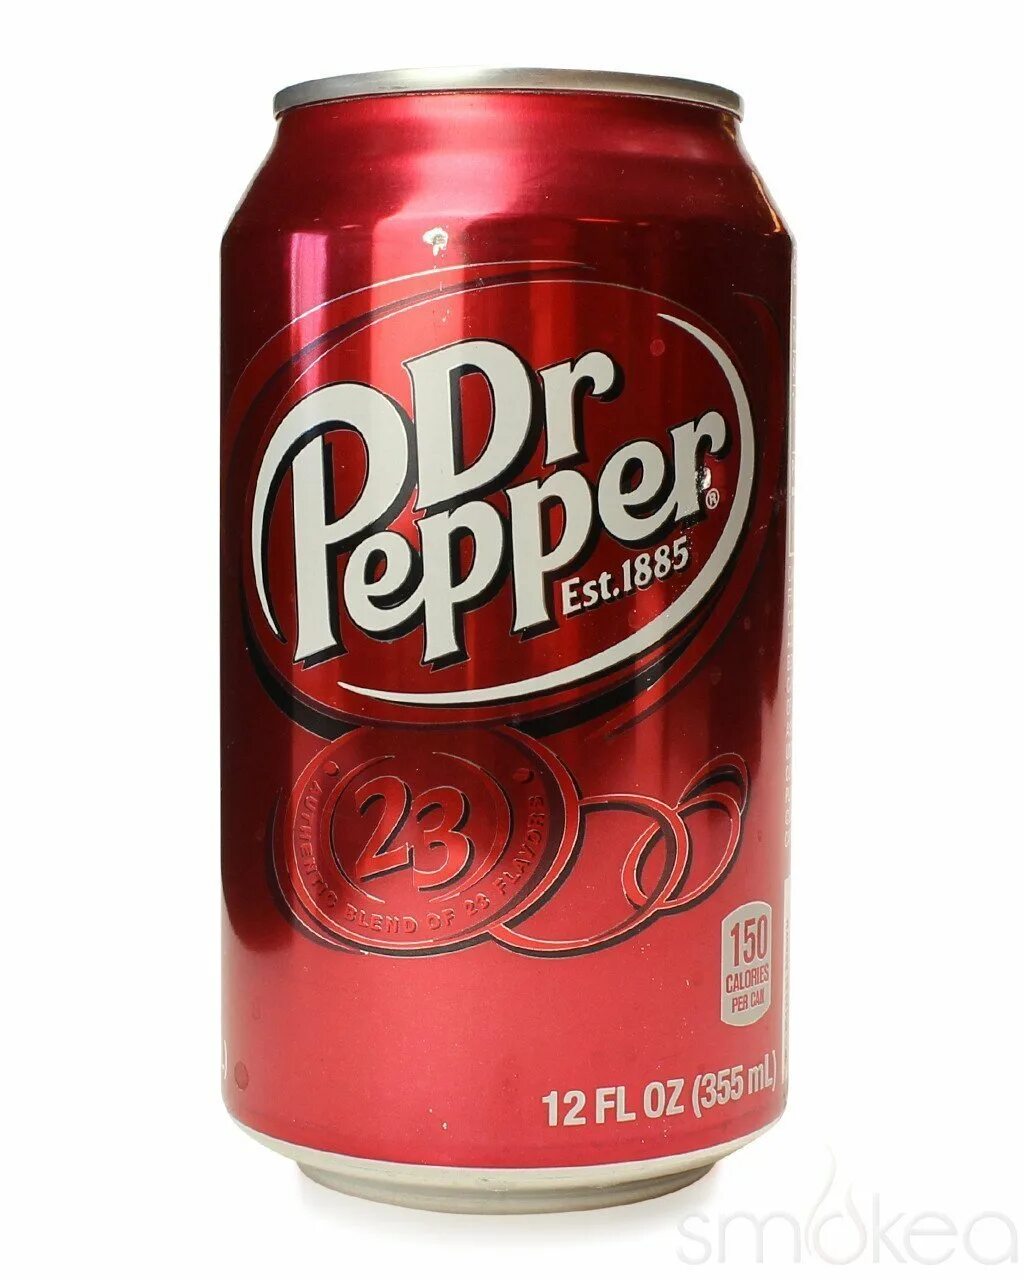 Pepper состав. Пеппер доктор Пеппер. Доктор Пеппер напиток 90-х. Газировка доктор Пеппер. Доктор Пеппер 1886.